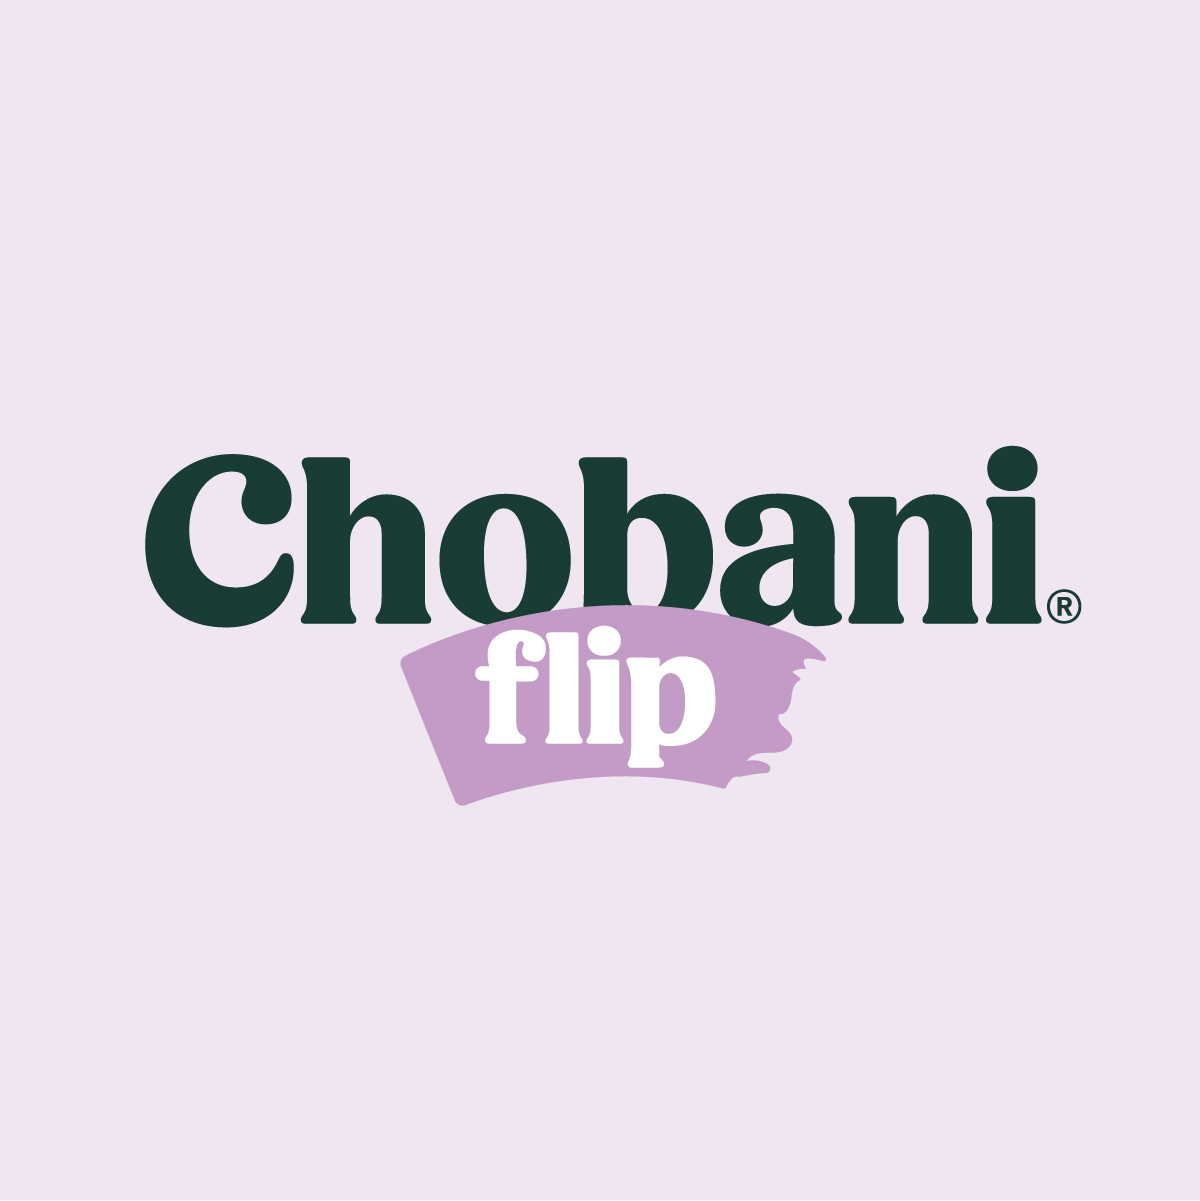 Chobani Yogurt Unicorn Packaging Design FMCG